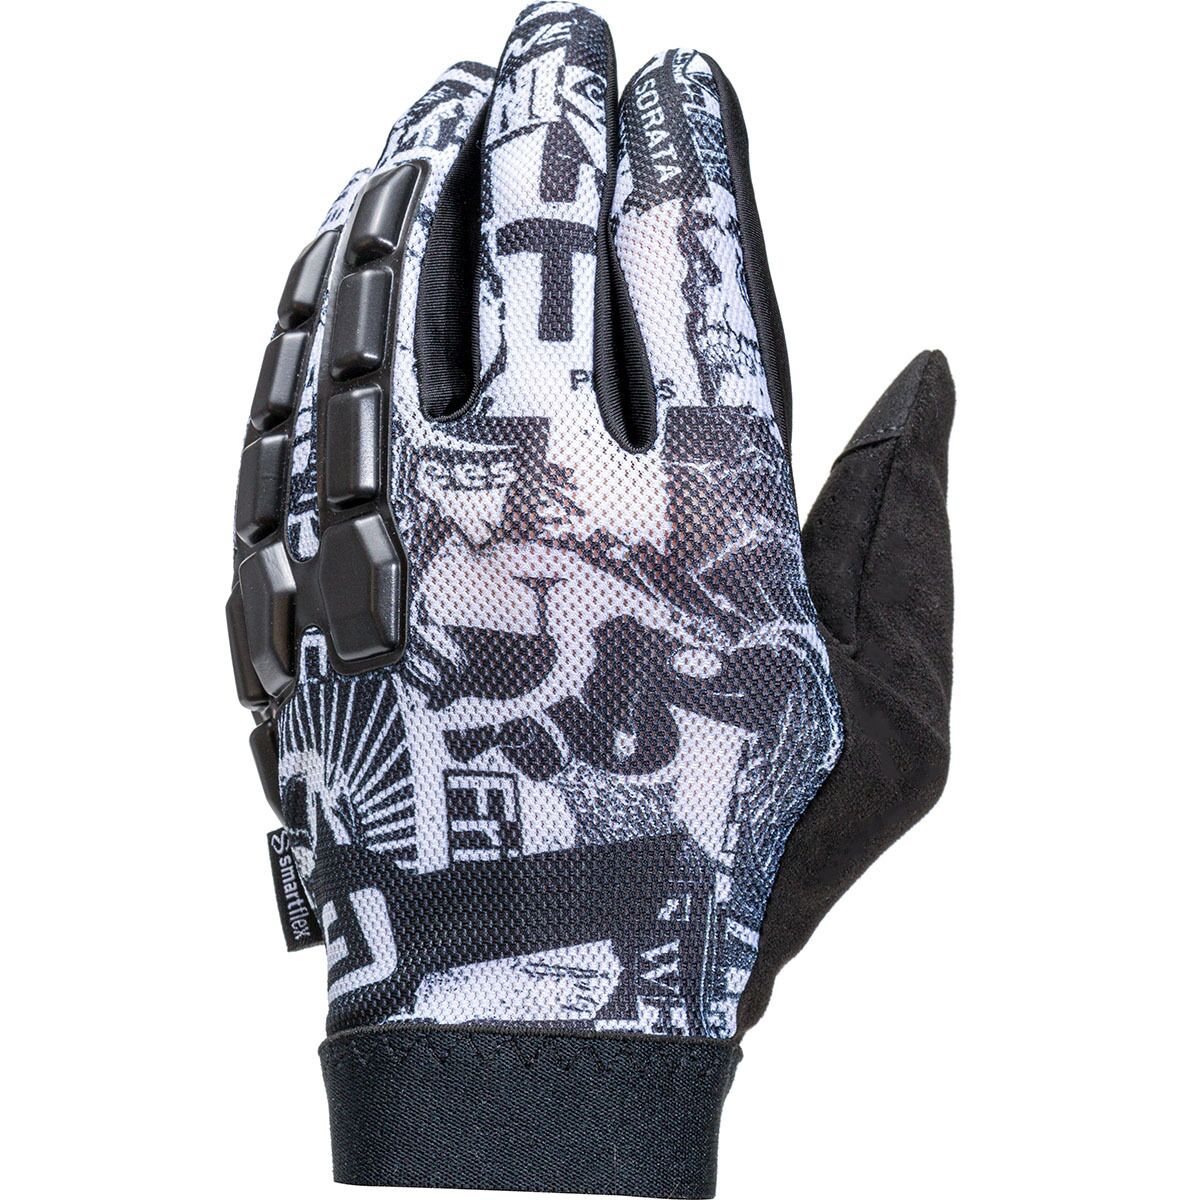 G-Form Sorata 2 Limited Edition Trail Glove - Men's